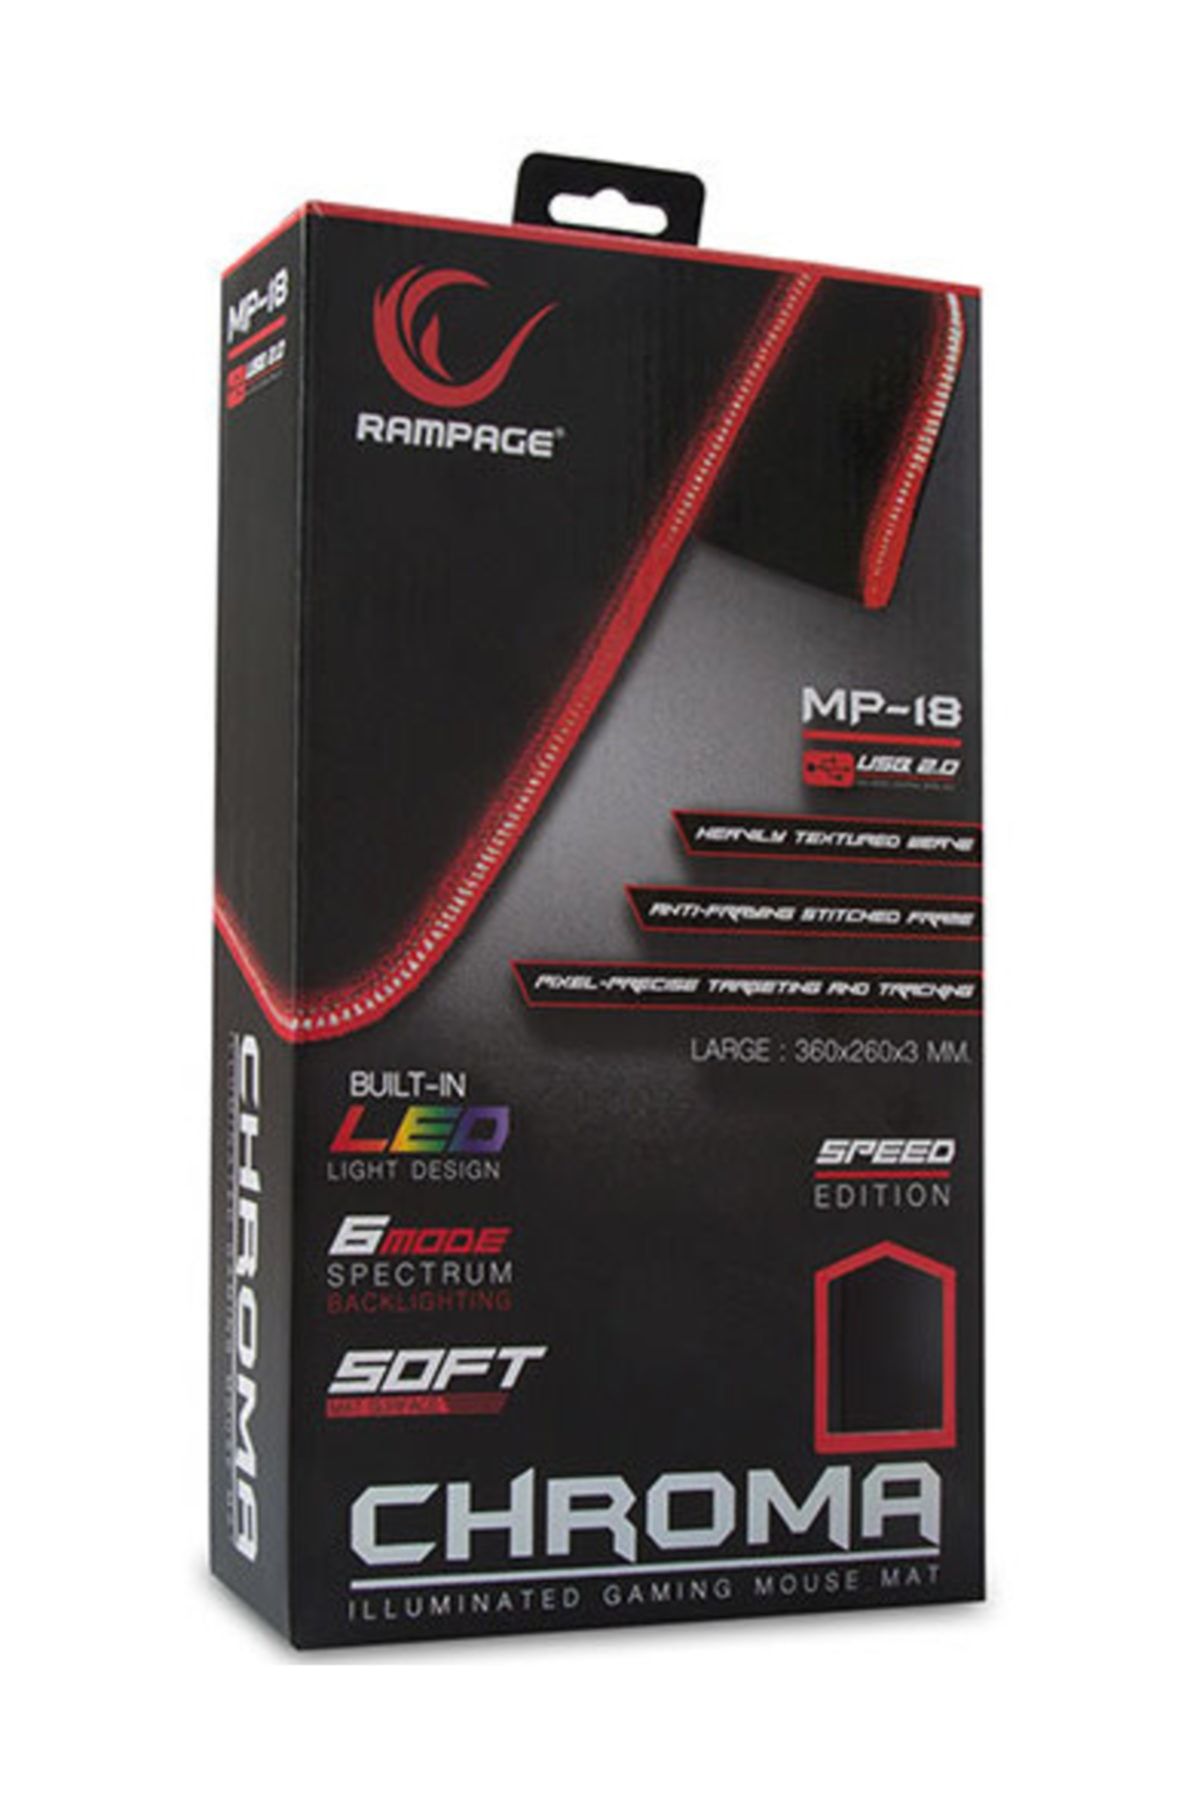 Rampage Mp-18 355x255x3.0mm Rgb Mouse Pad